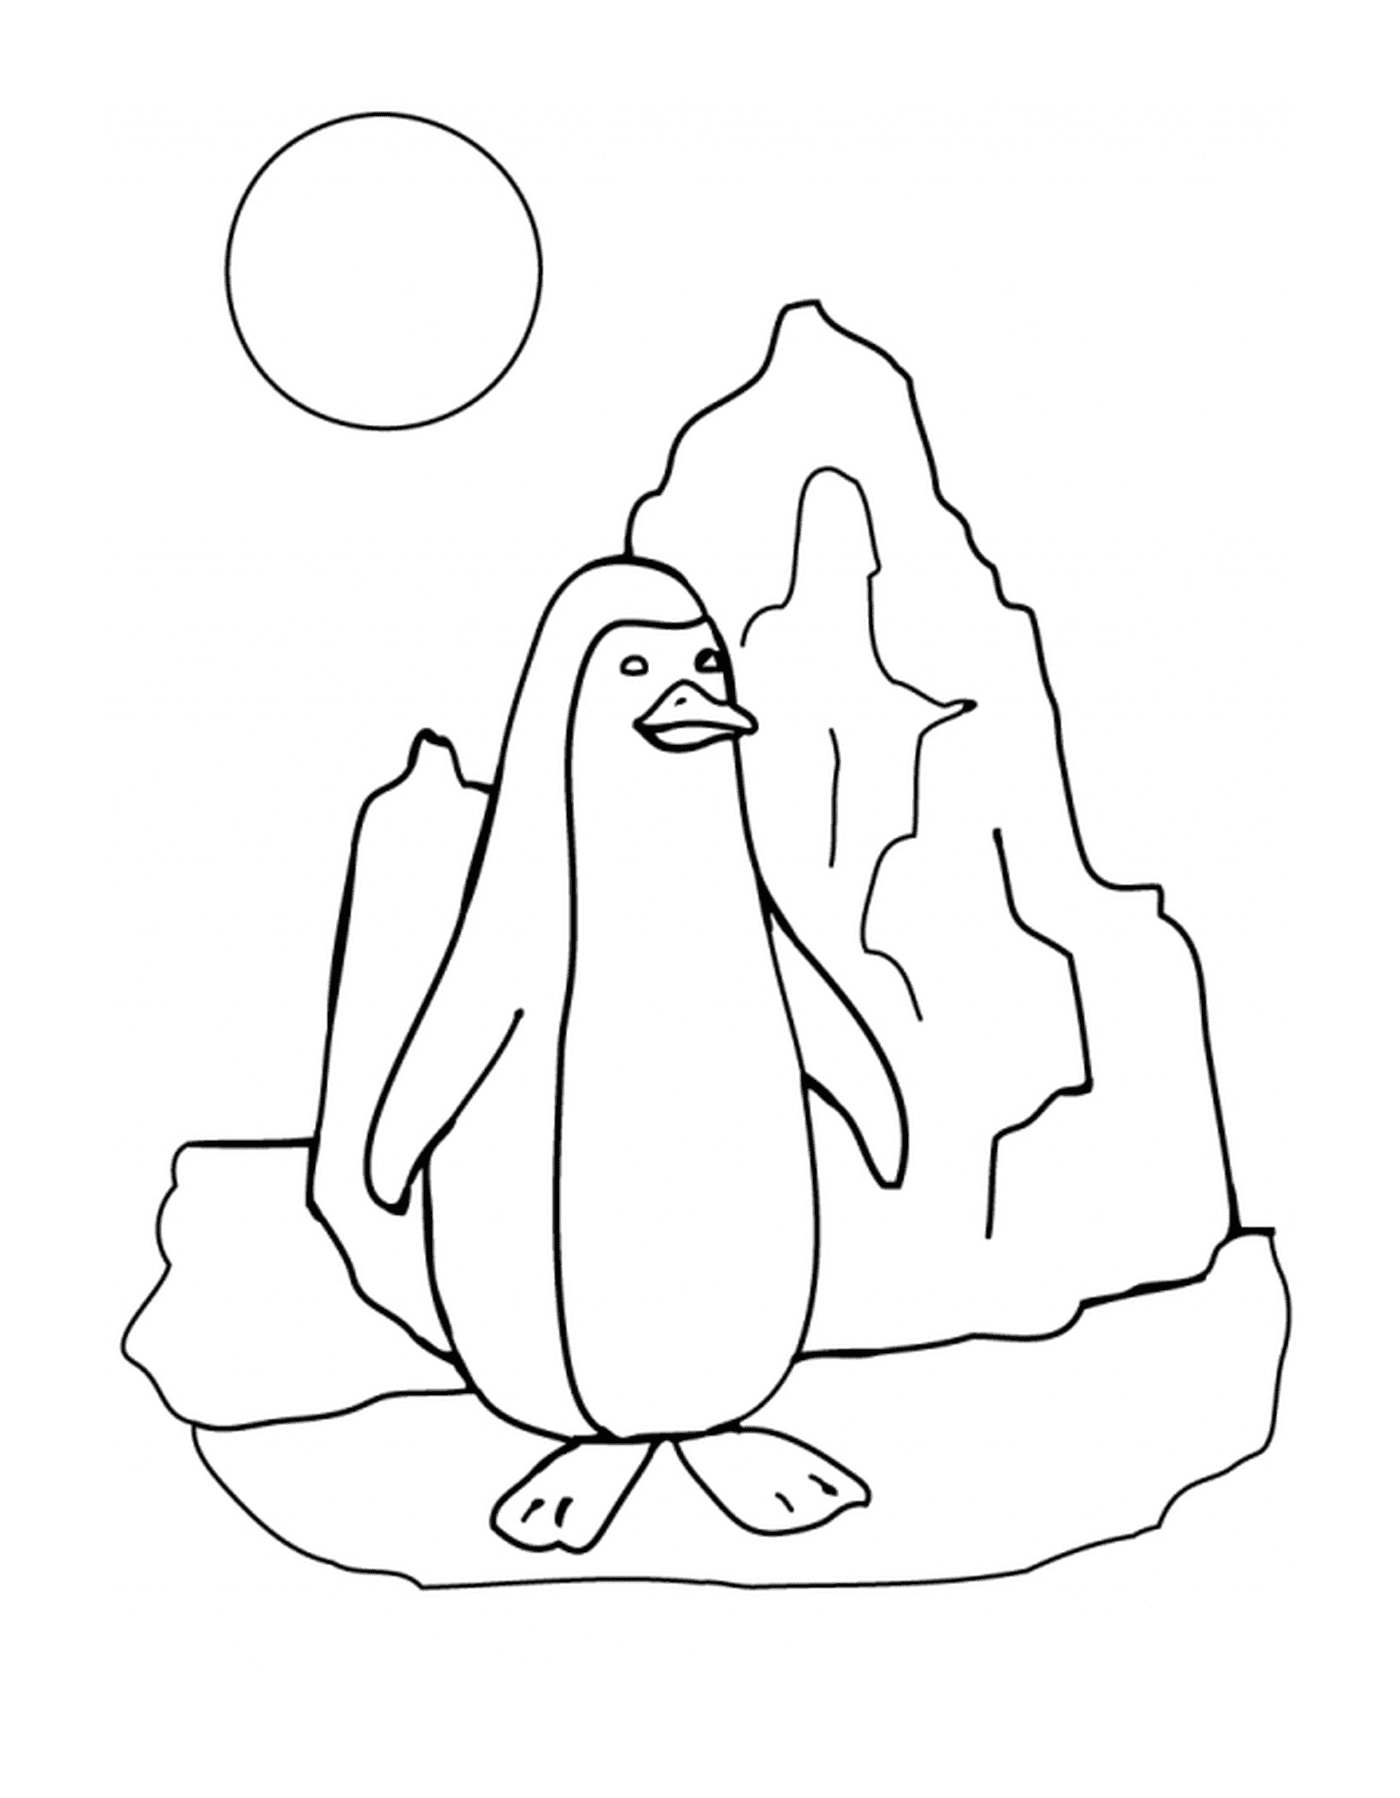  Pinguino sul ghiaccio soleggiato 